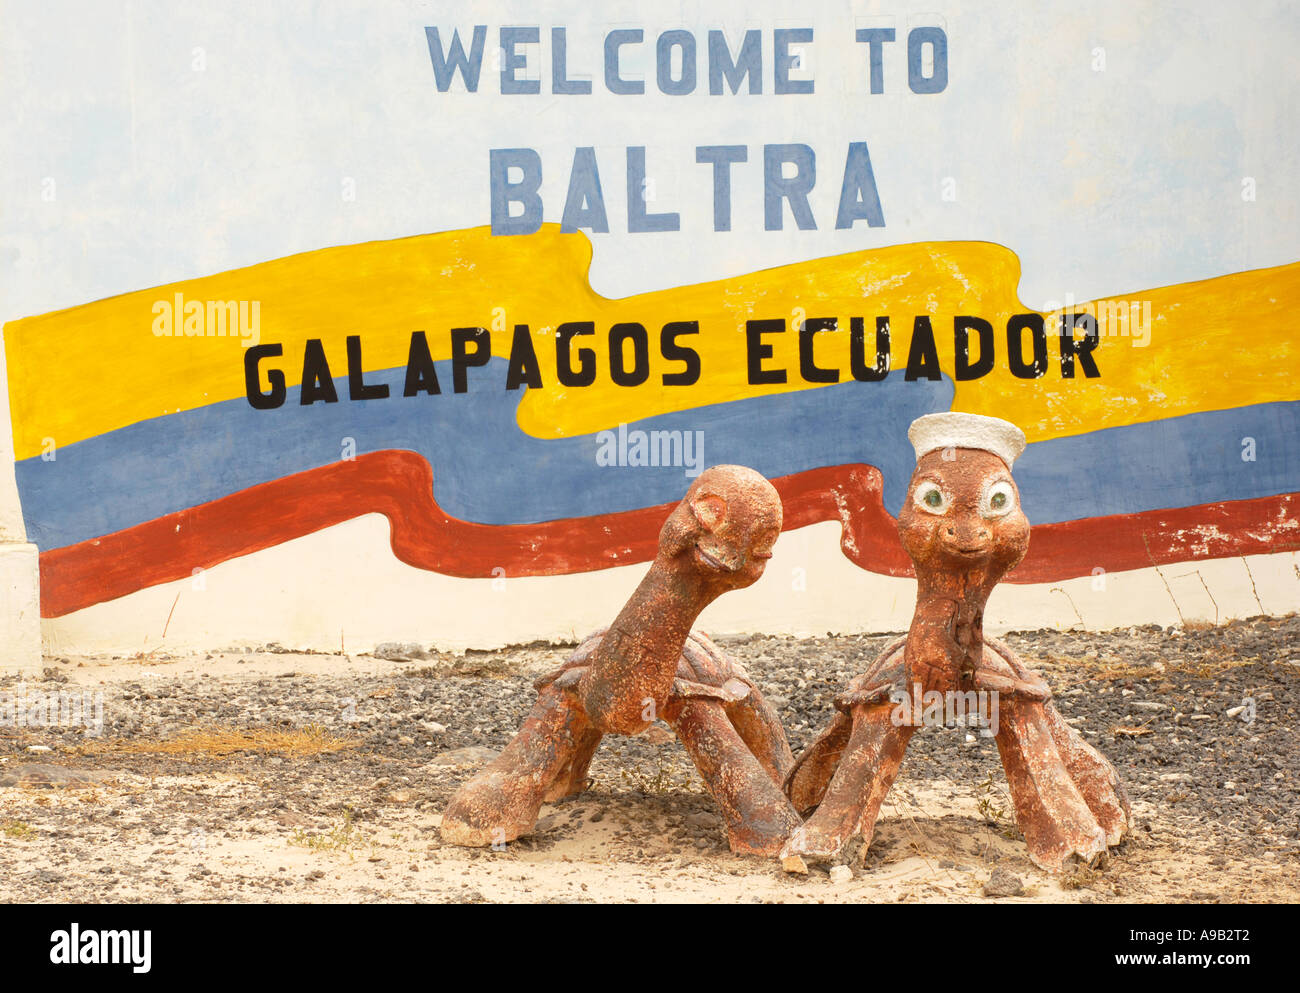 South America Latin America Ecuador Galapagos Islands Santa Cruz Island Turtle sculptures and welcome sign at airport on Baltra Stock Photo